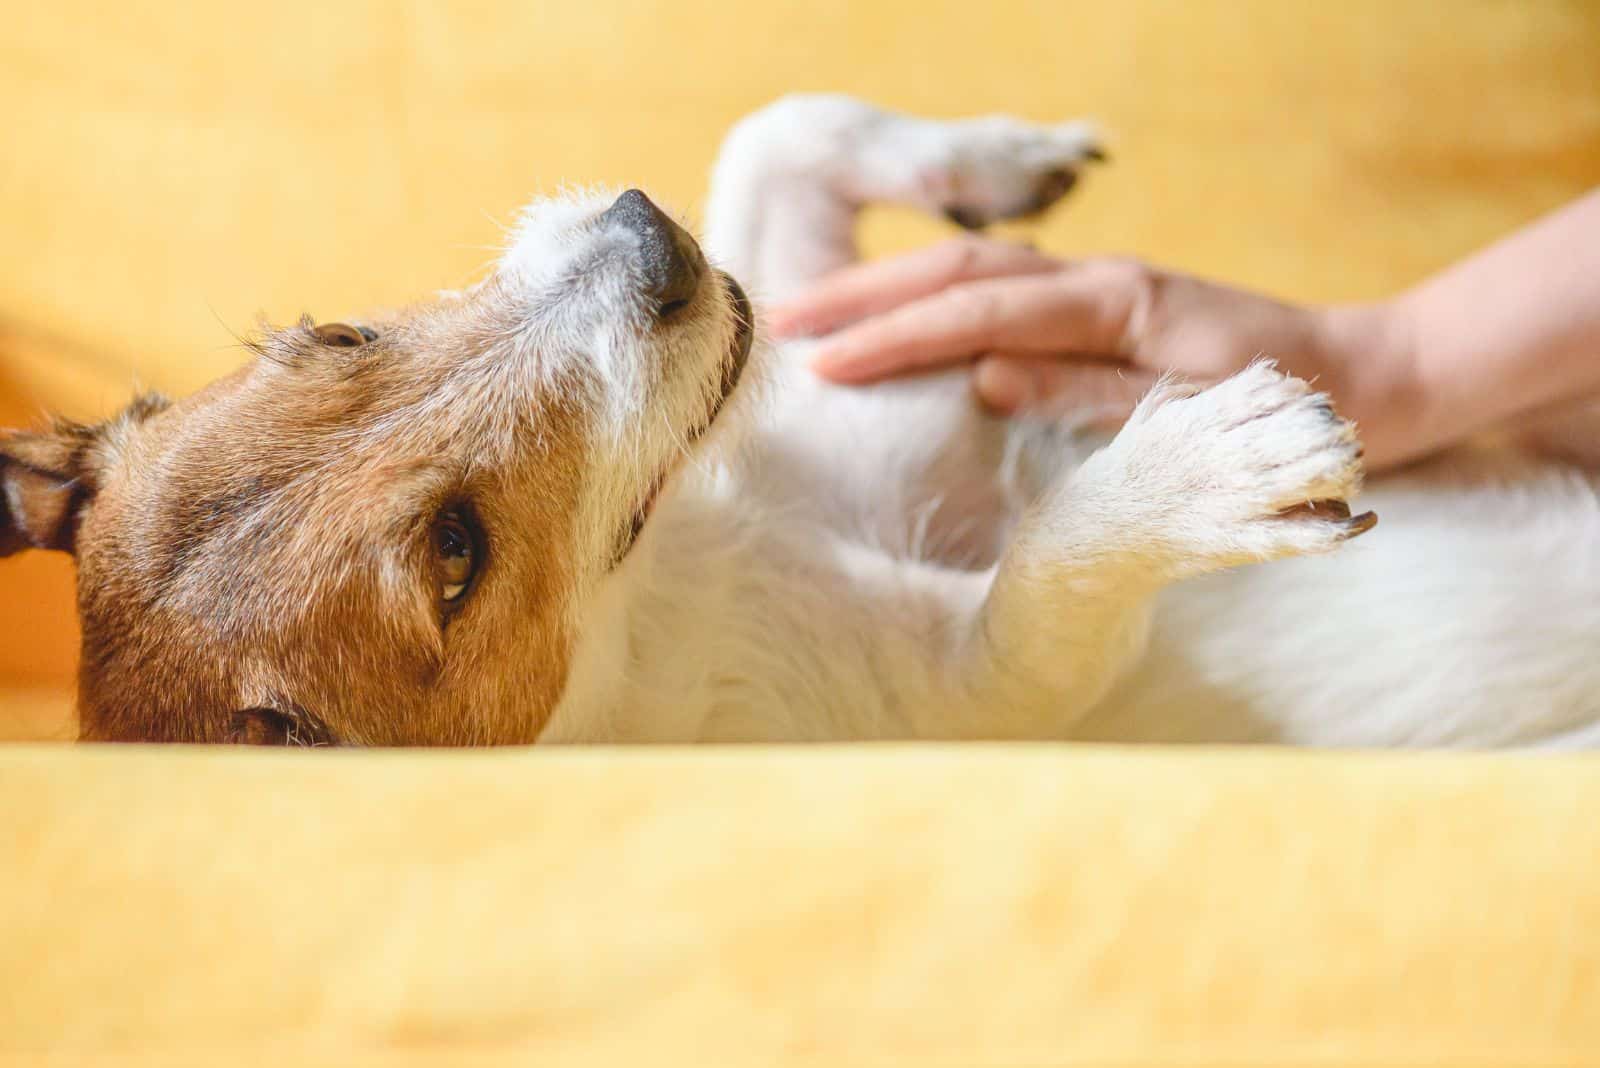 Dog Behavior 101 – Why Do Dogs Like Belly Rubs